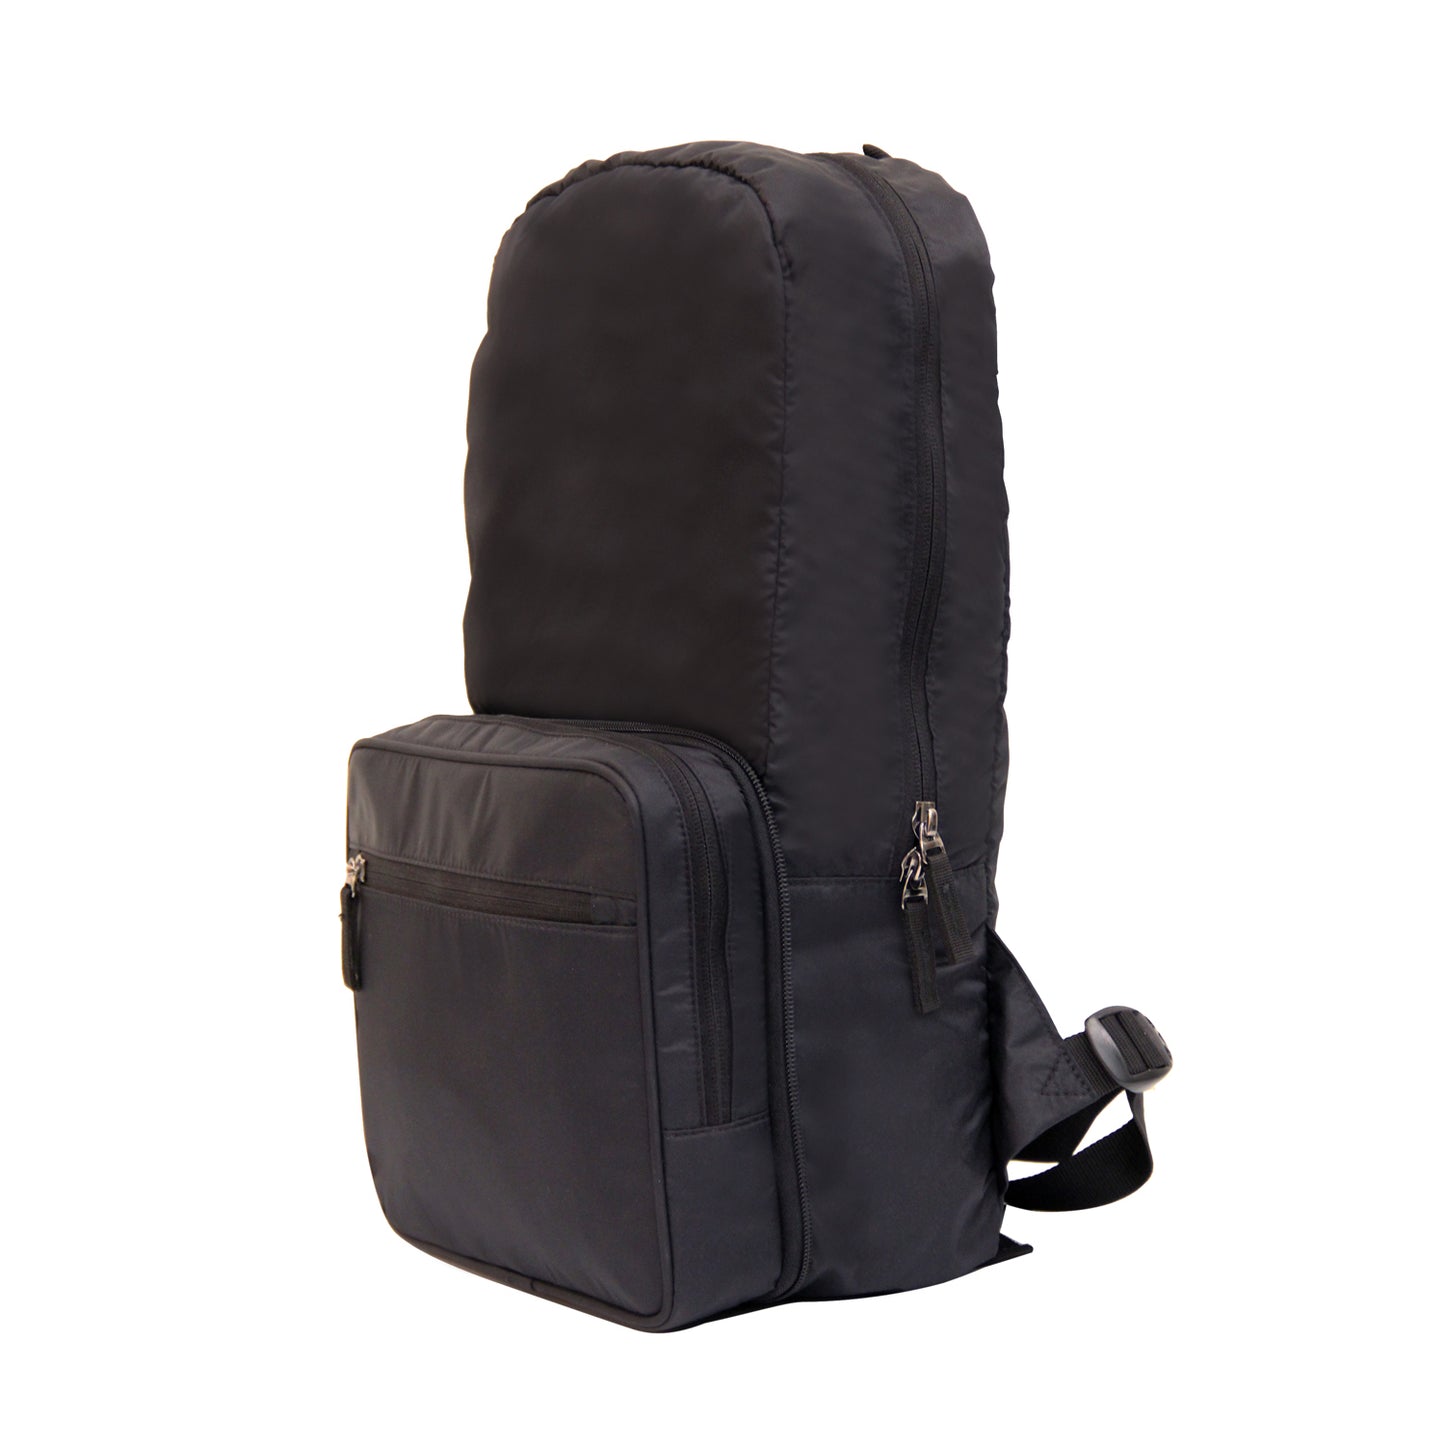 Multi-functional Travel Bag